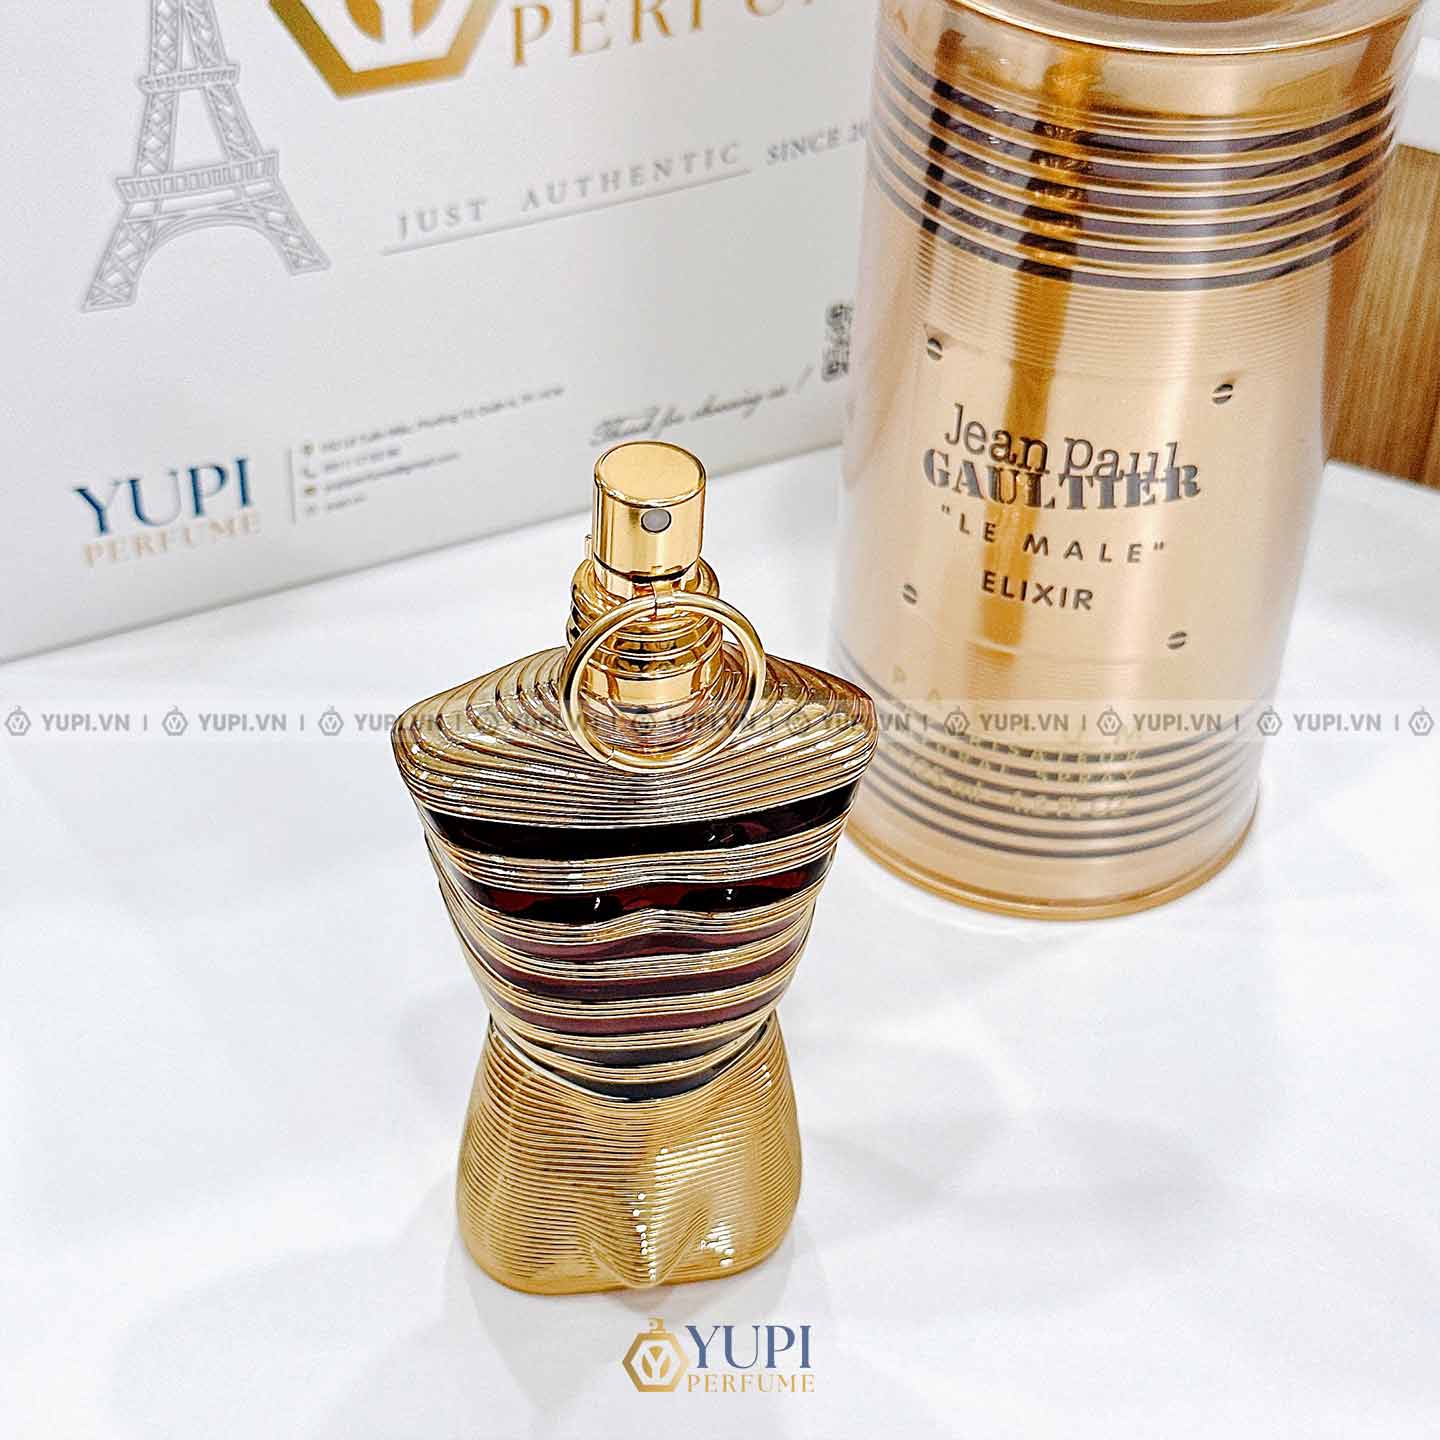 jean paul gaultier le male elixir parfum